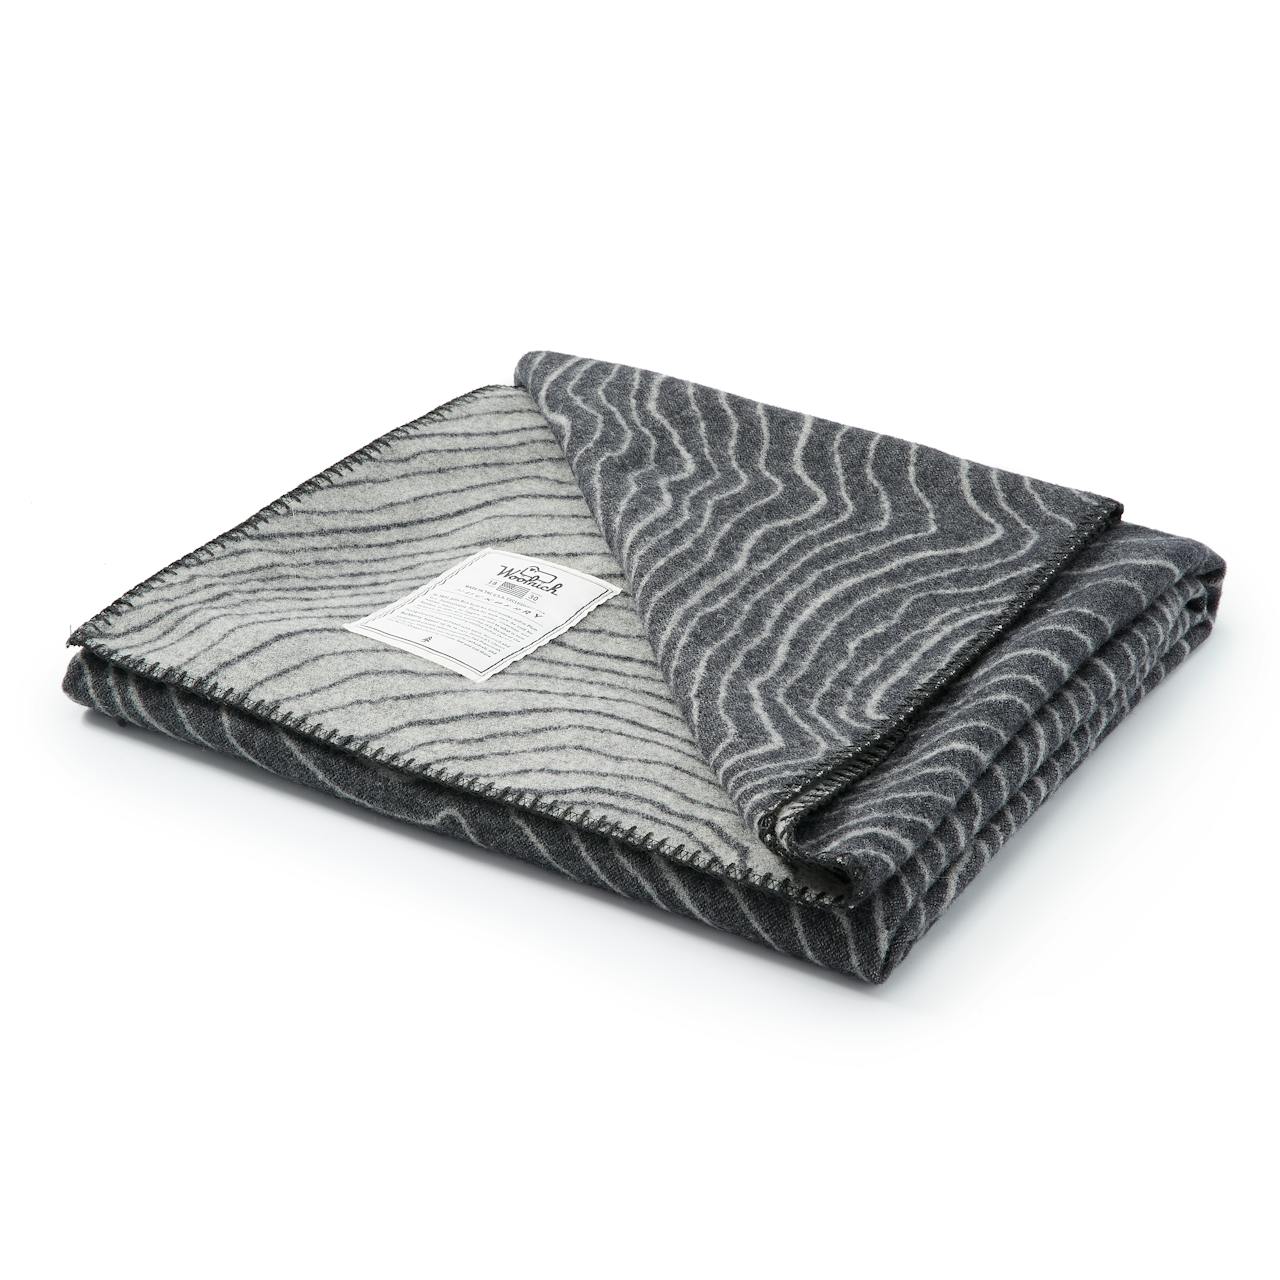 Woolrich Huckberry Exclusive - Topo Jacquard Blanket